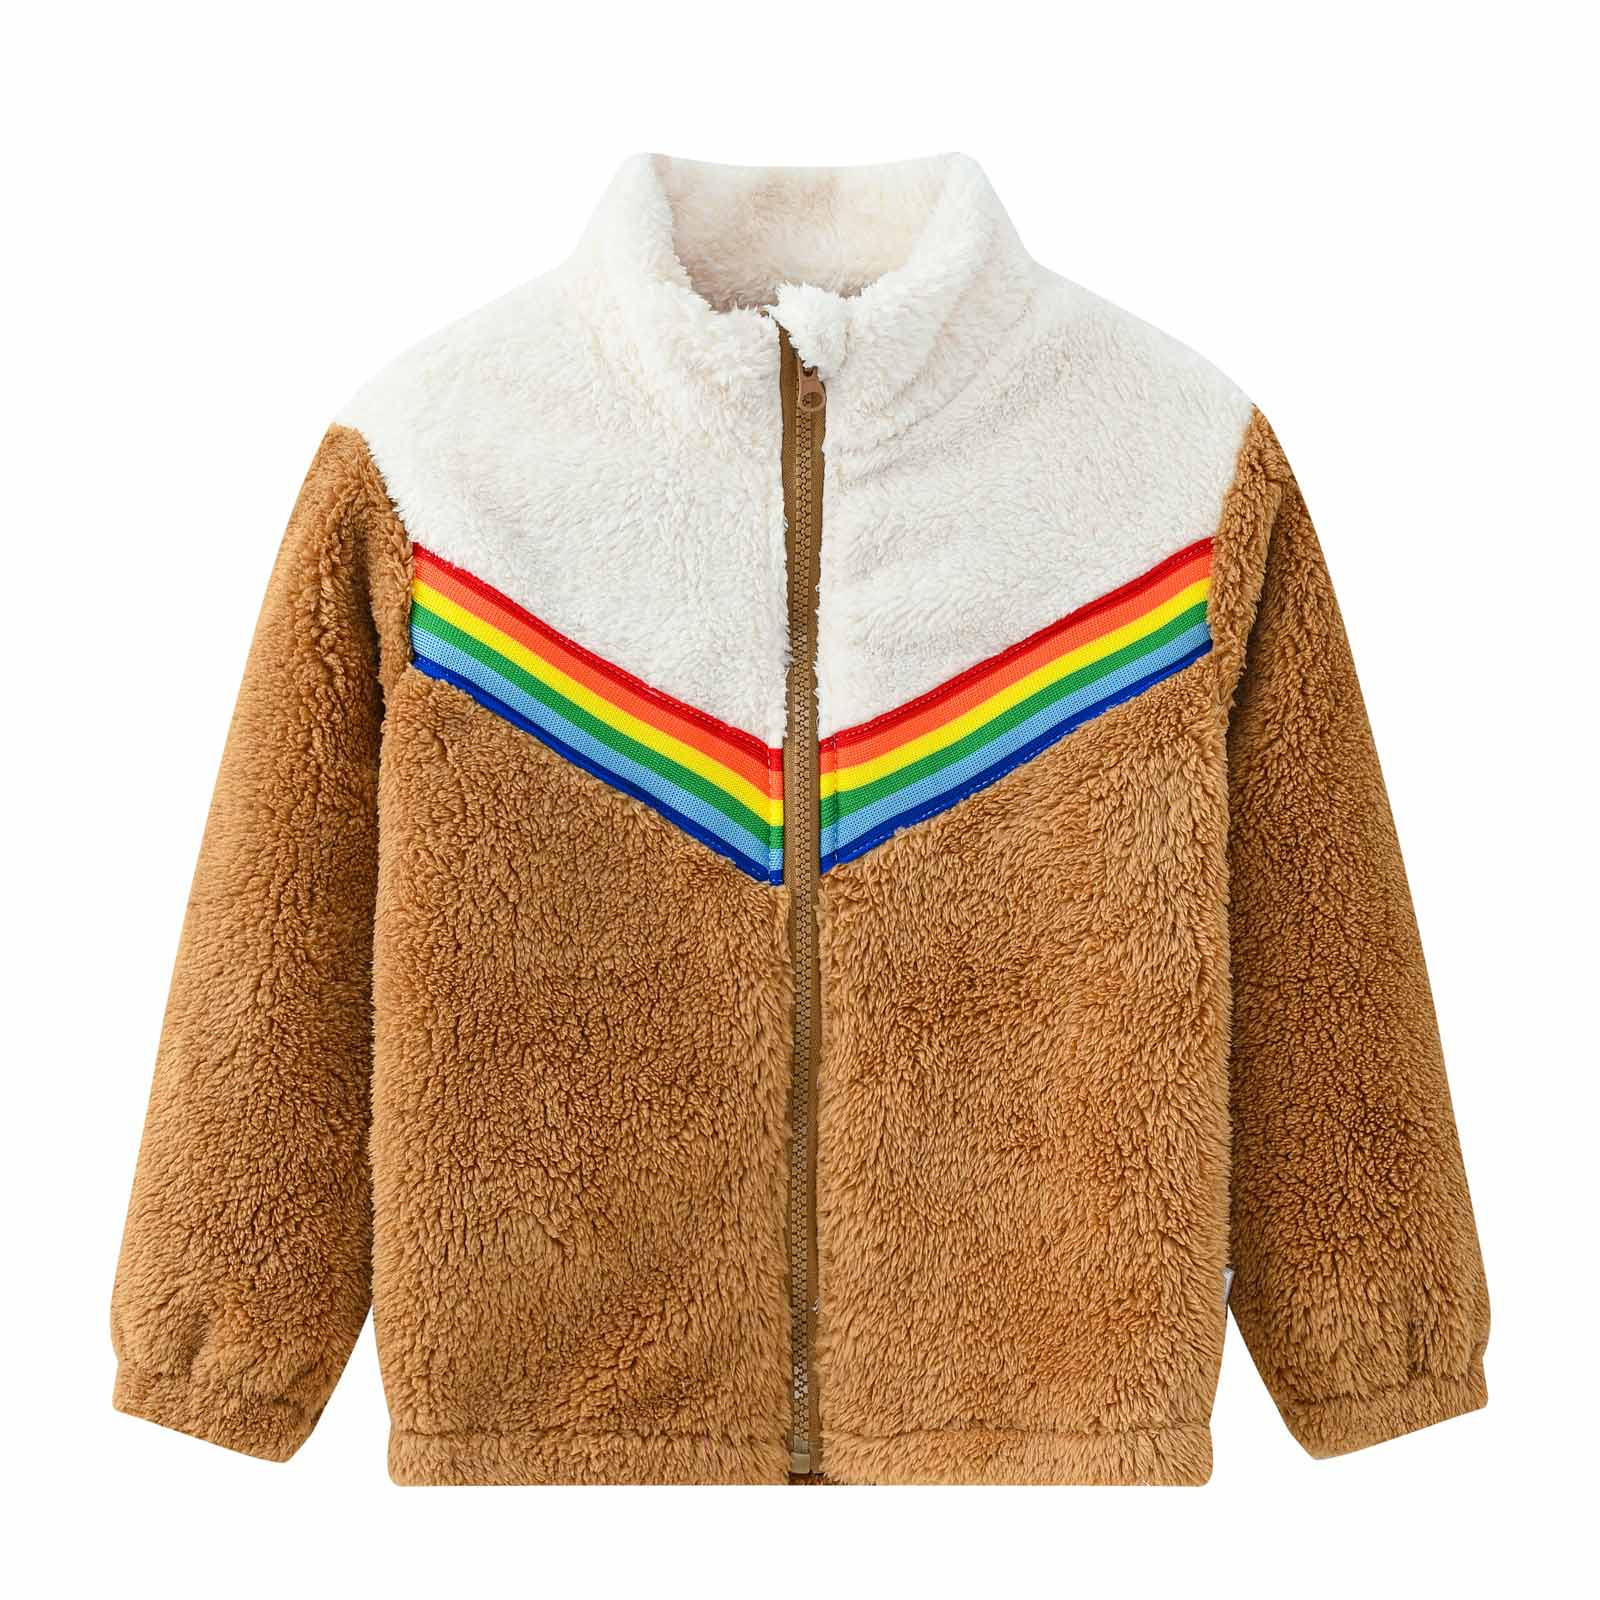 YYDGH Girls Zipper Jacket Fuzzy Sweatshirt Long Sleeve Casual Cozy Fleece Sherpa Outwear Coat Full-Zip Rainbow Jackets(Khaki,5-6 Years) - image 1 of 8